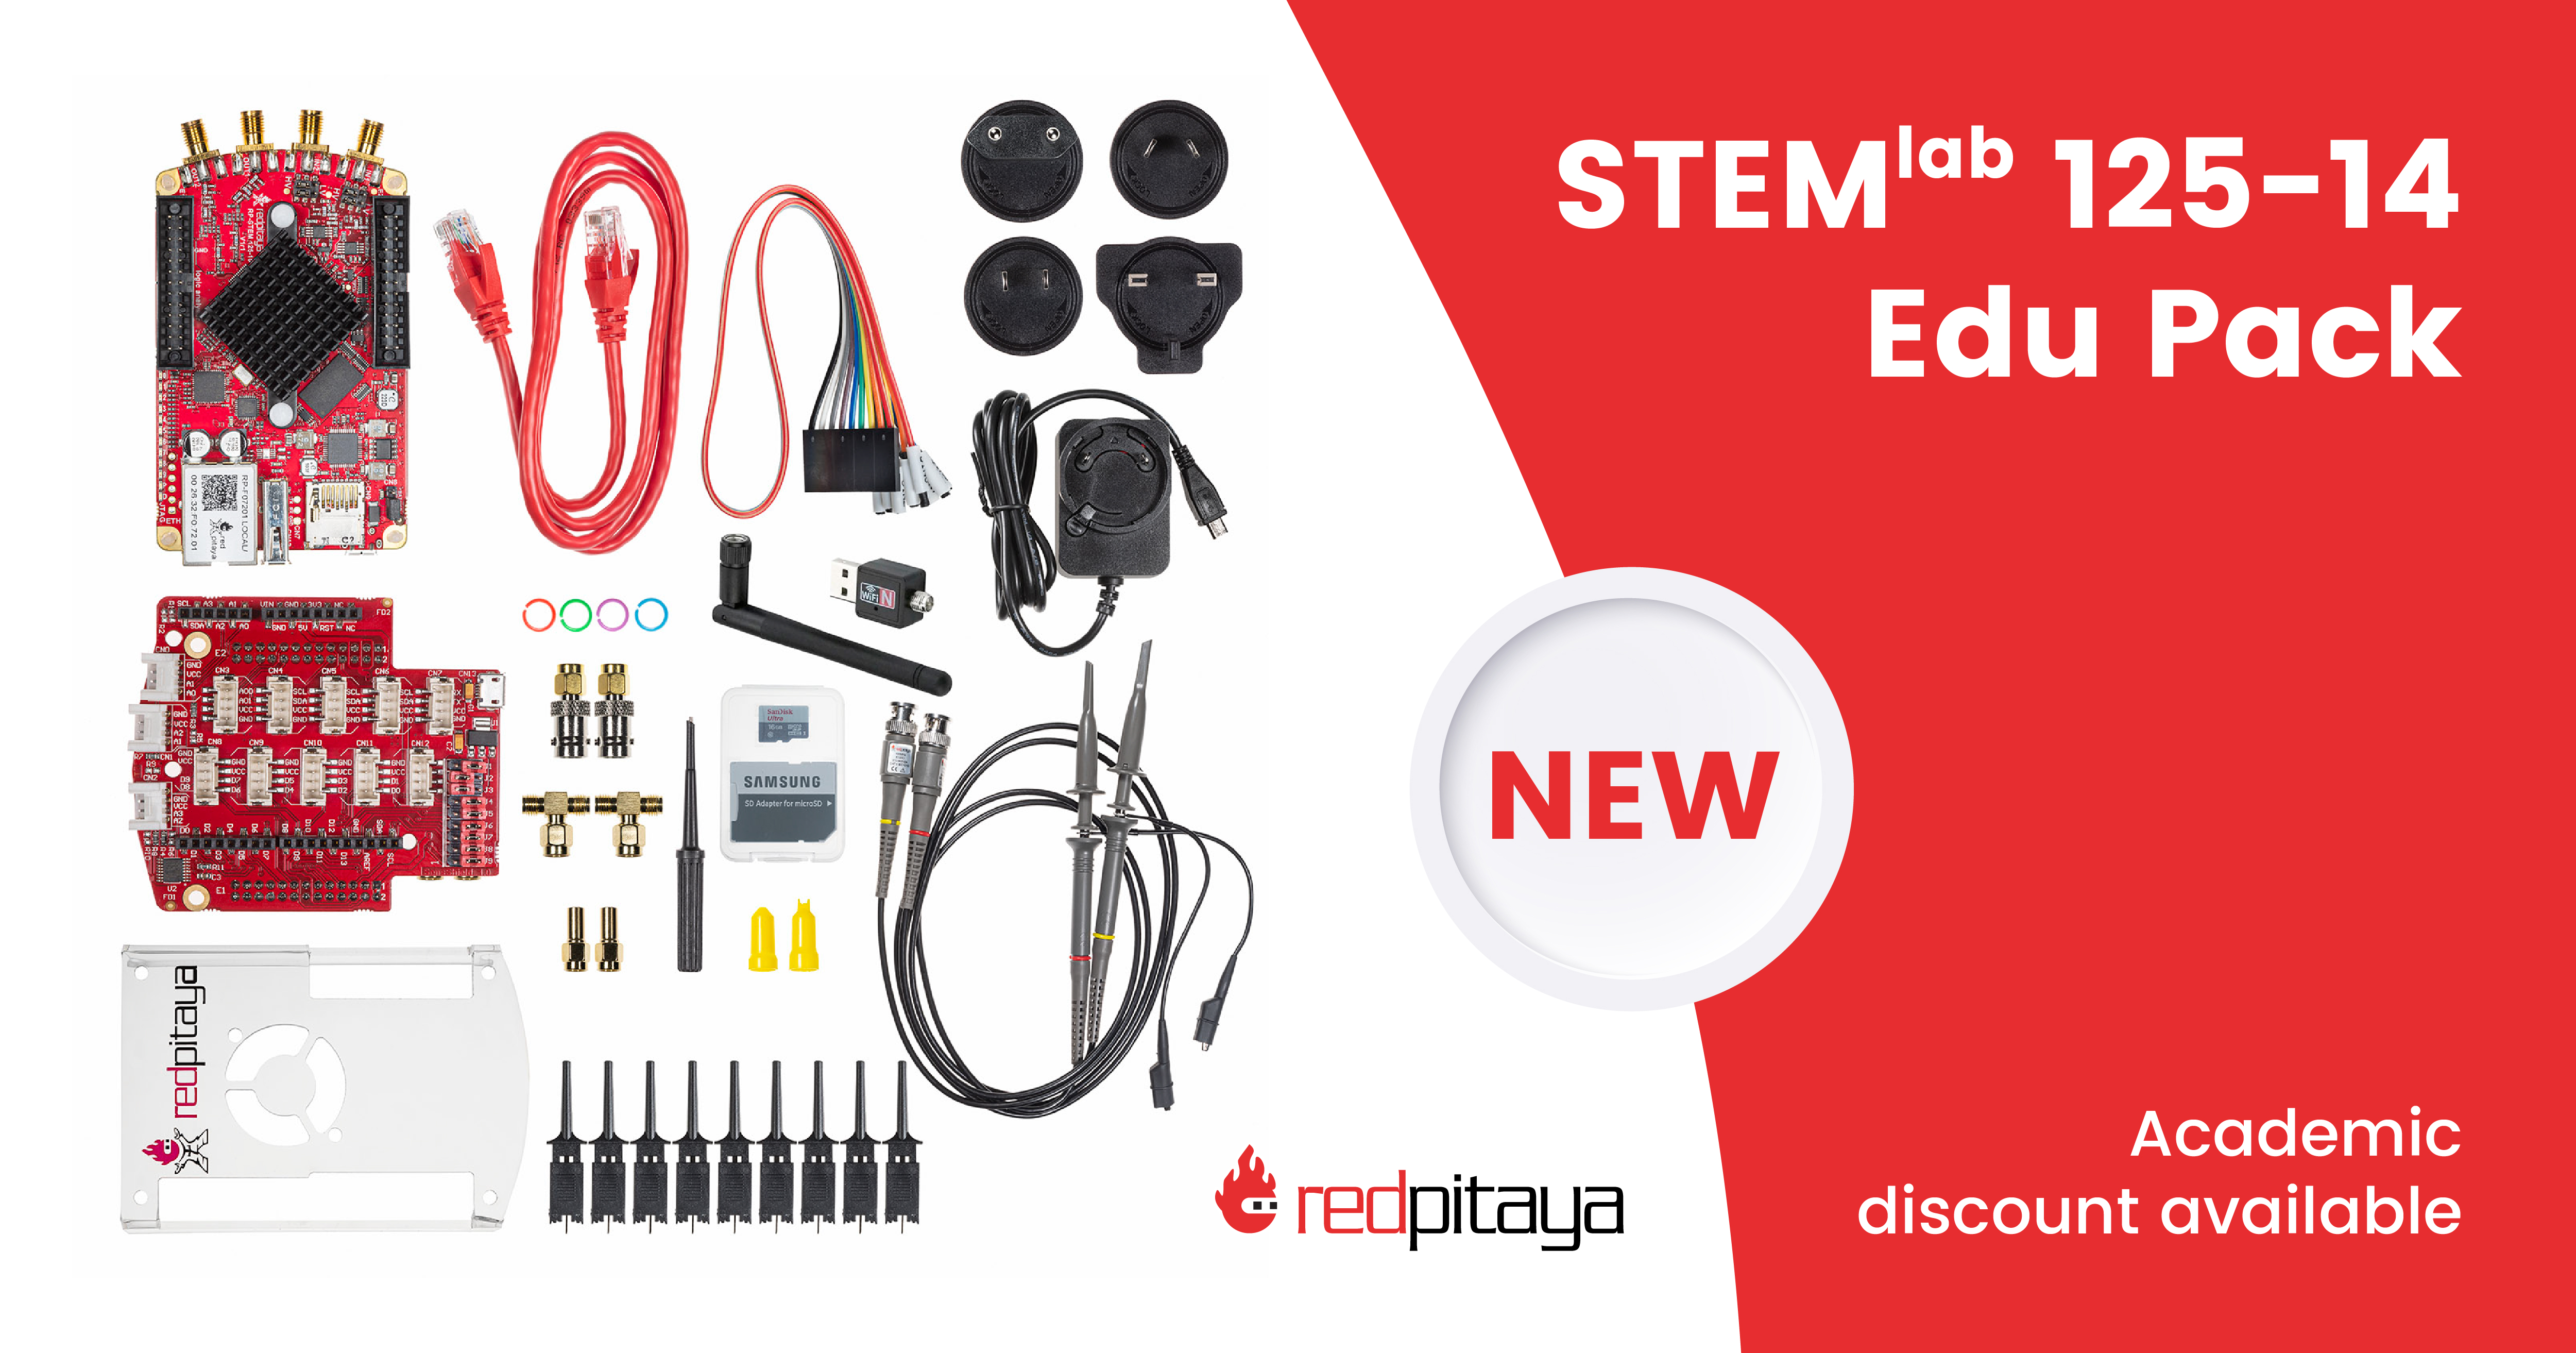 The new STEMlab 125-14 Edu Pack